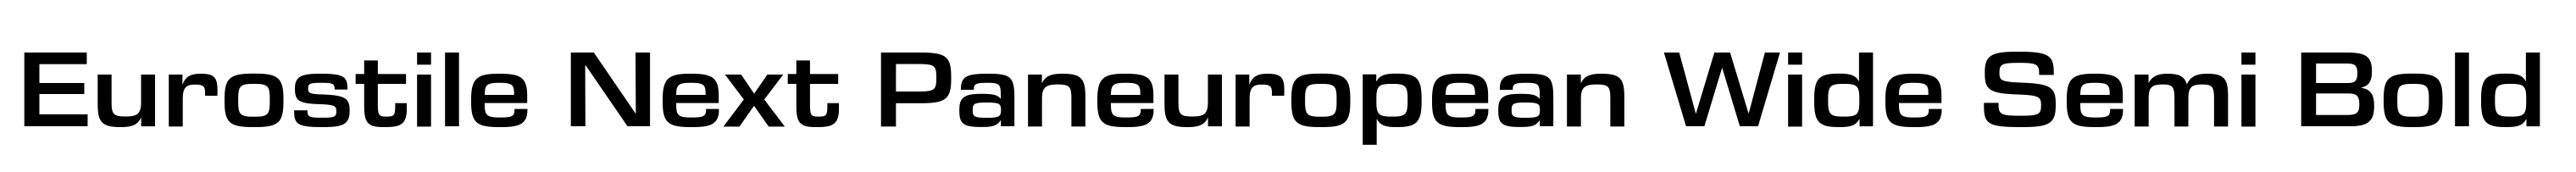 Eurostile Next Paneuropean Wide Semi Bold